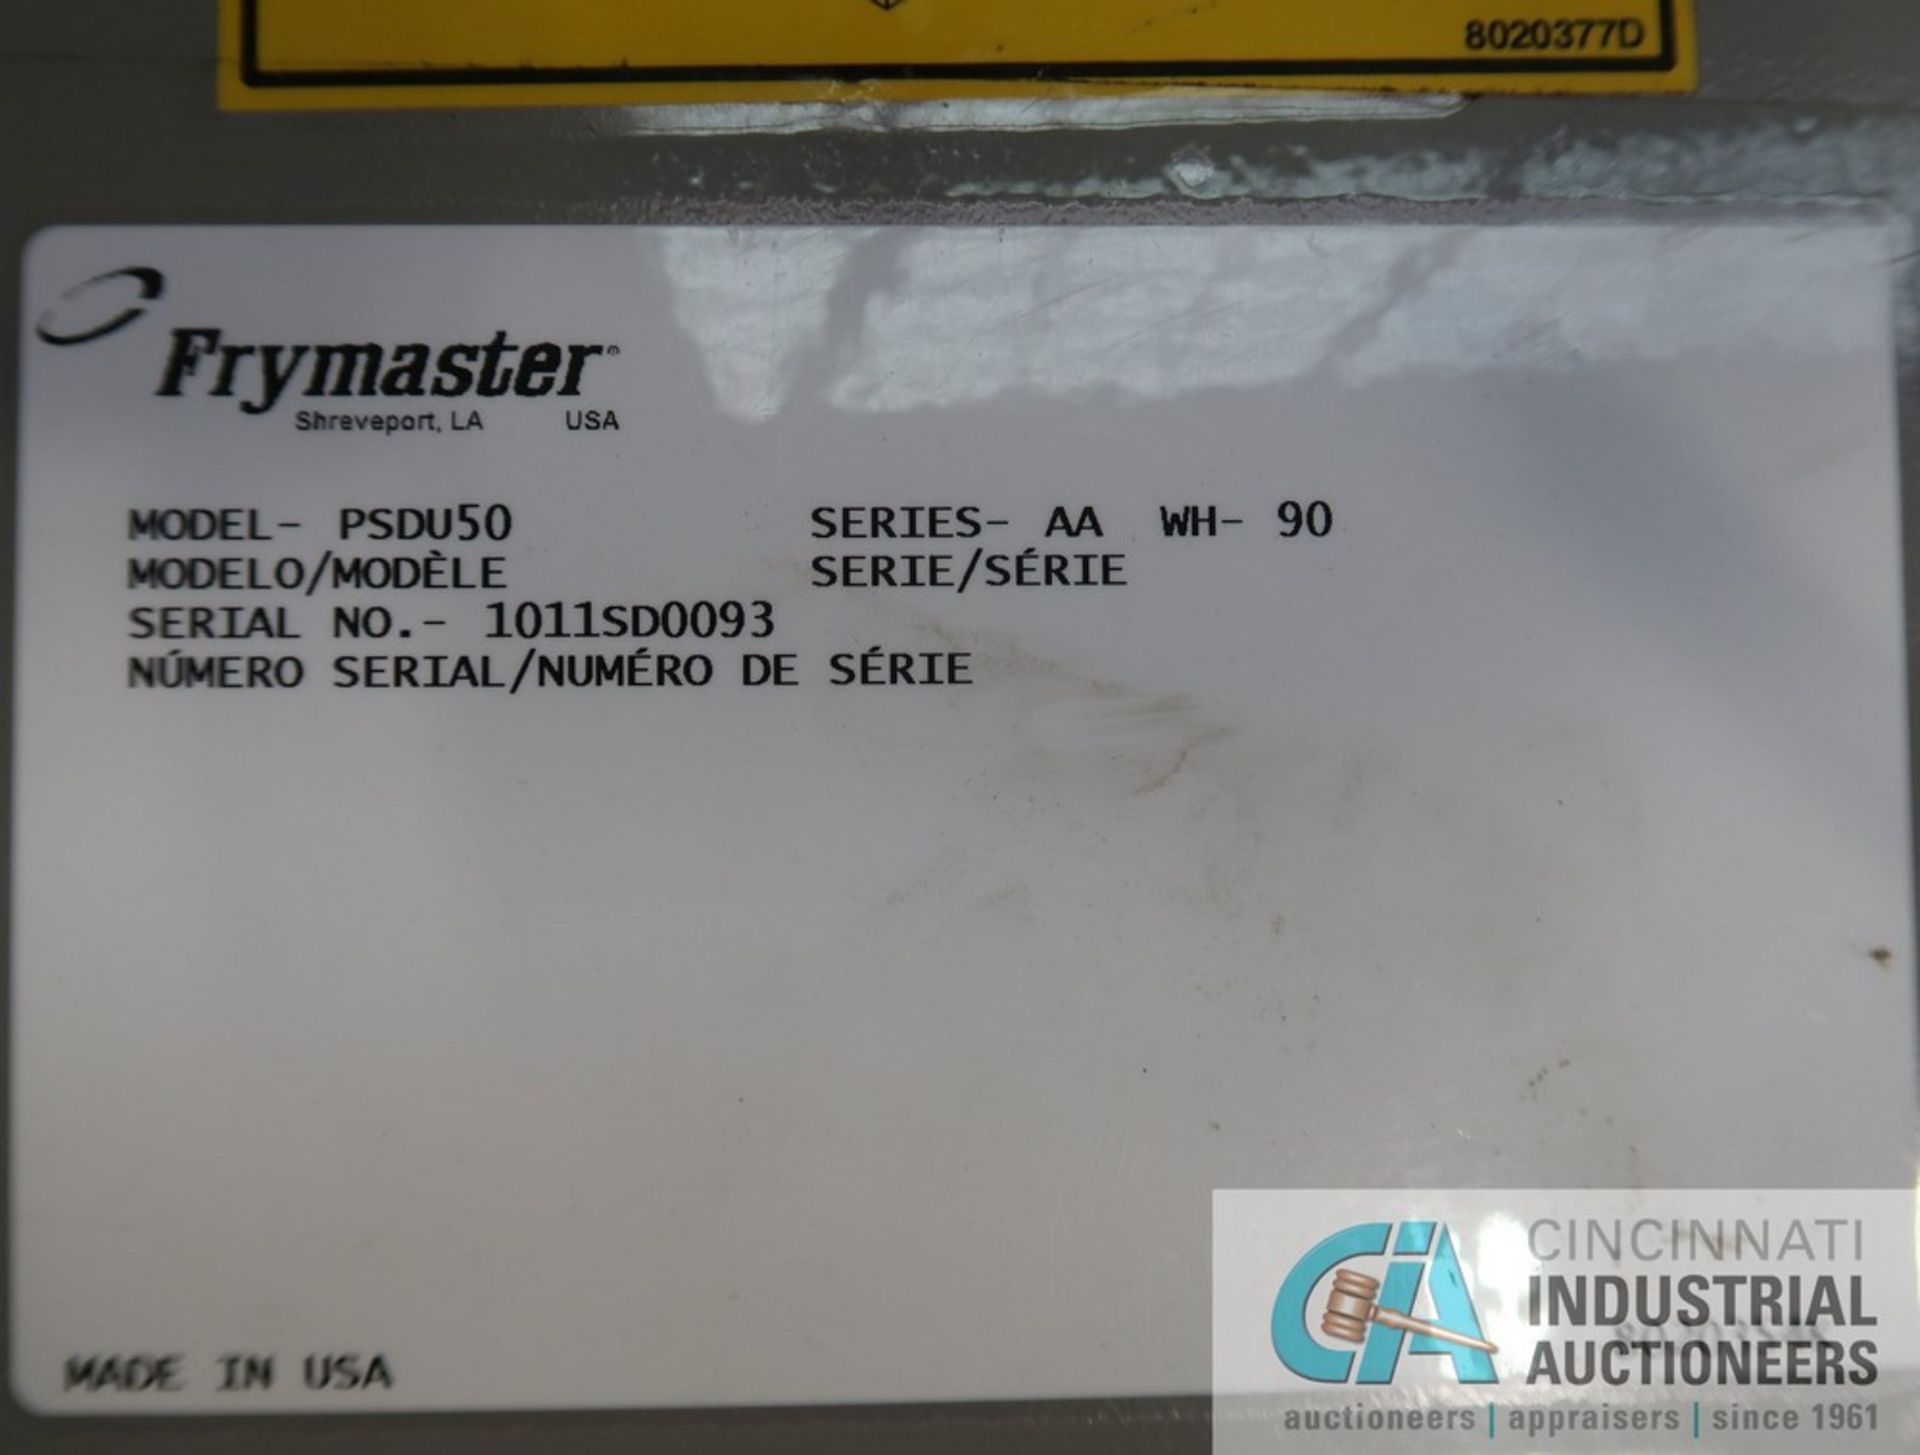 FRYMASTER MODEL PSDU50 50 LB. PORABLE MANULA PUMP SHORTENING DISPOSAL UNIT; S/N 1011SD0093, WITH MIR - Image 7 of 7